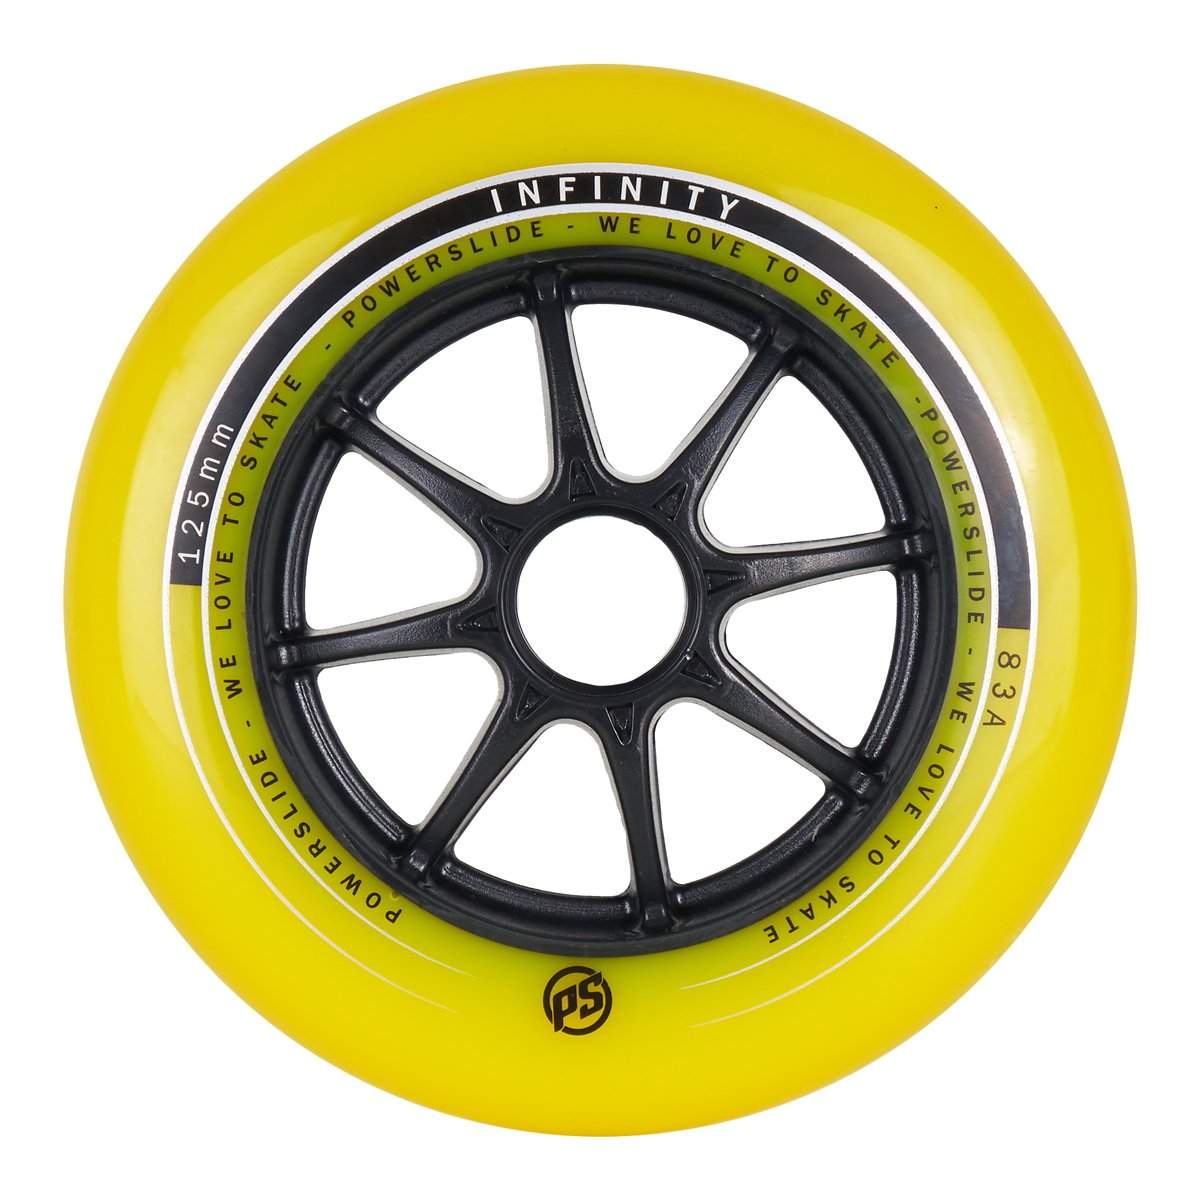 Powerslide Infinity 125mm Wheels - Yellow (Singles)-Powerslide-125mm,atcUpsellCol:upsellwheels,Skate Parts,Wheels,yellow